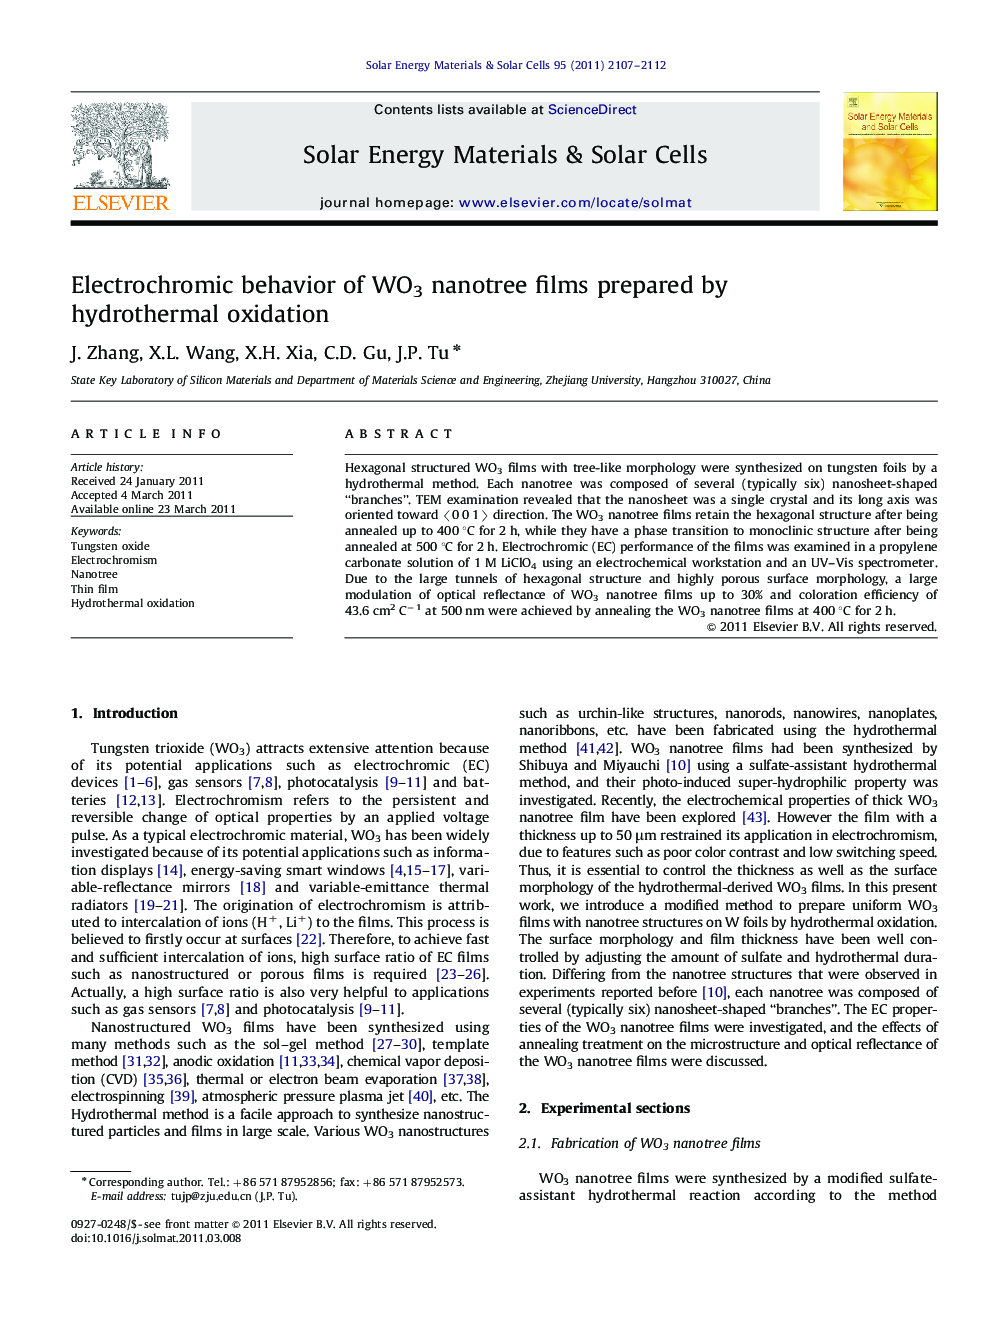 Electrochromic behavior of WO3 nanotree films prepared by hydrothermal oxidation